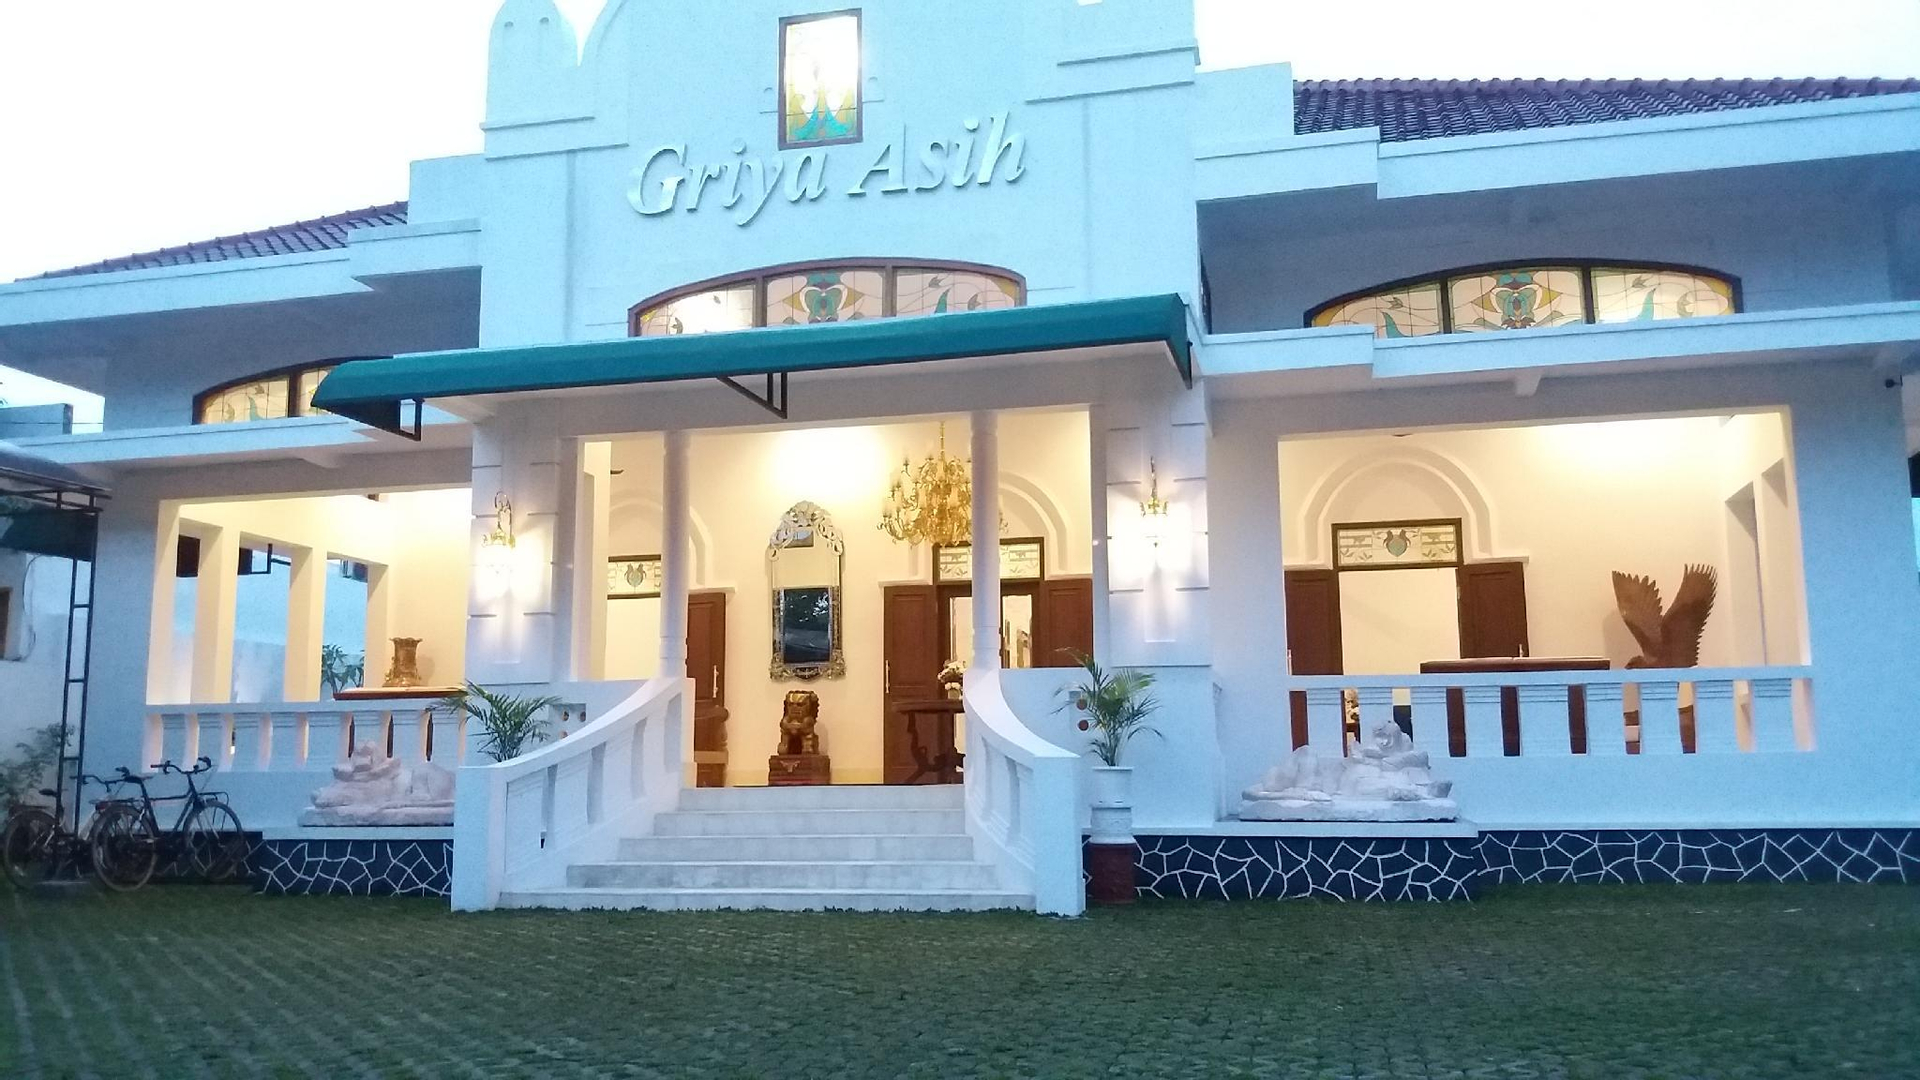 Griya Asih Yogyakarta, Yogyakarta